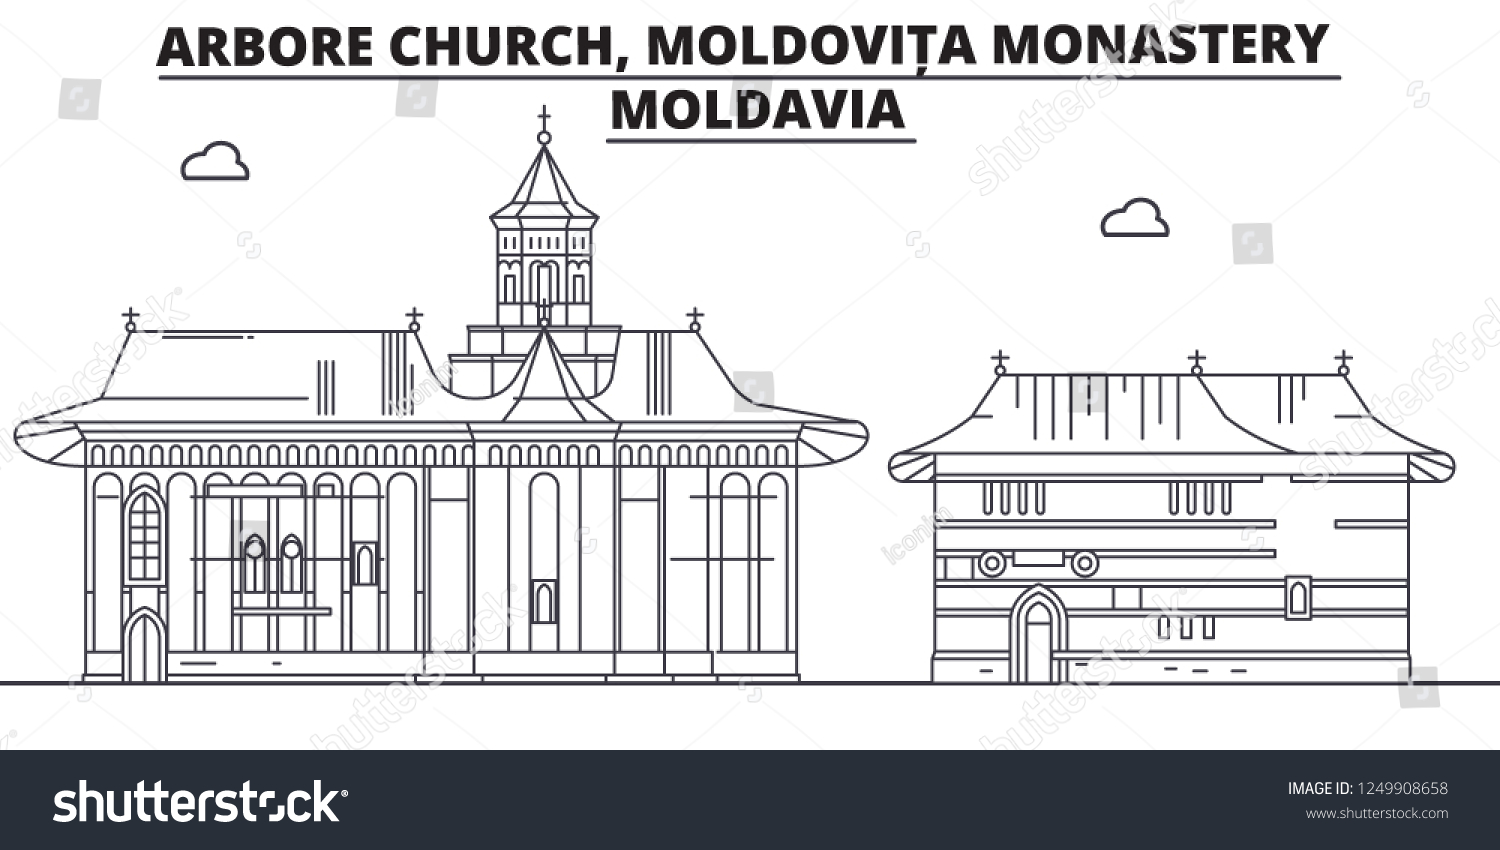 SVG of Moldavia - Arbore Church, Moldovita Monastery travel famous landmark skyline, panorama, vector. Moldavia - Arbore Church, Moldovita Monastery linear illustration svg